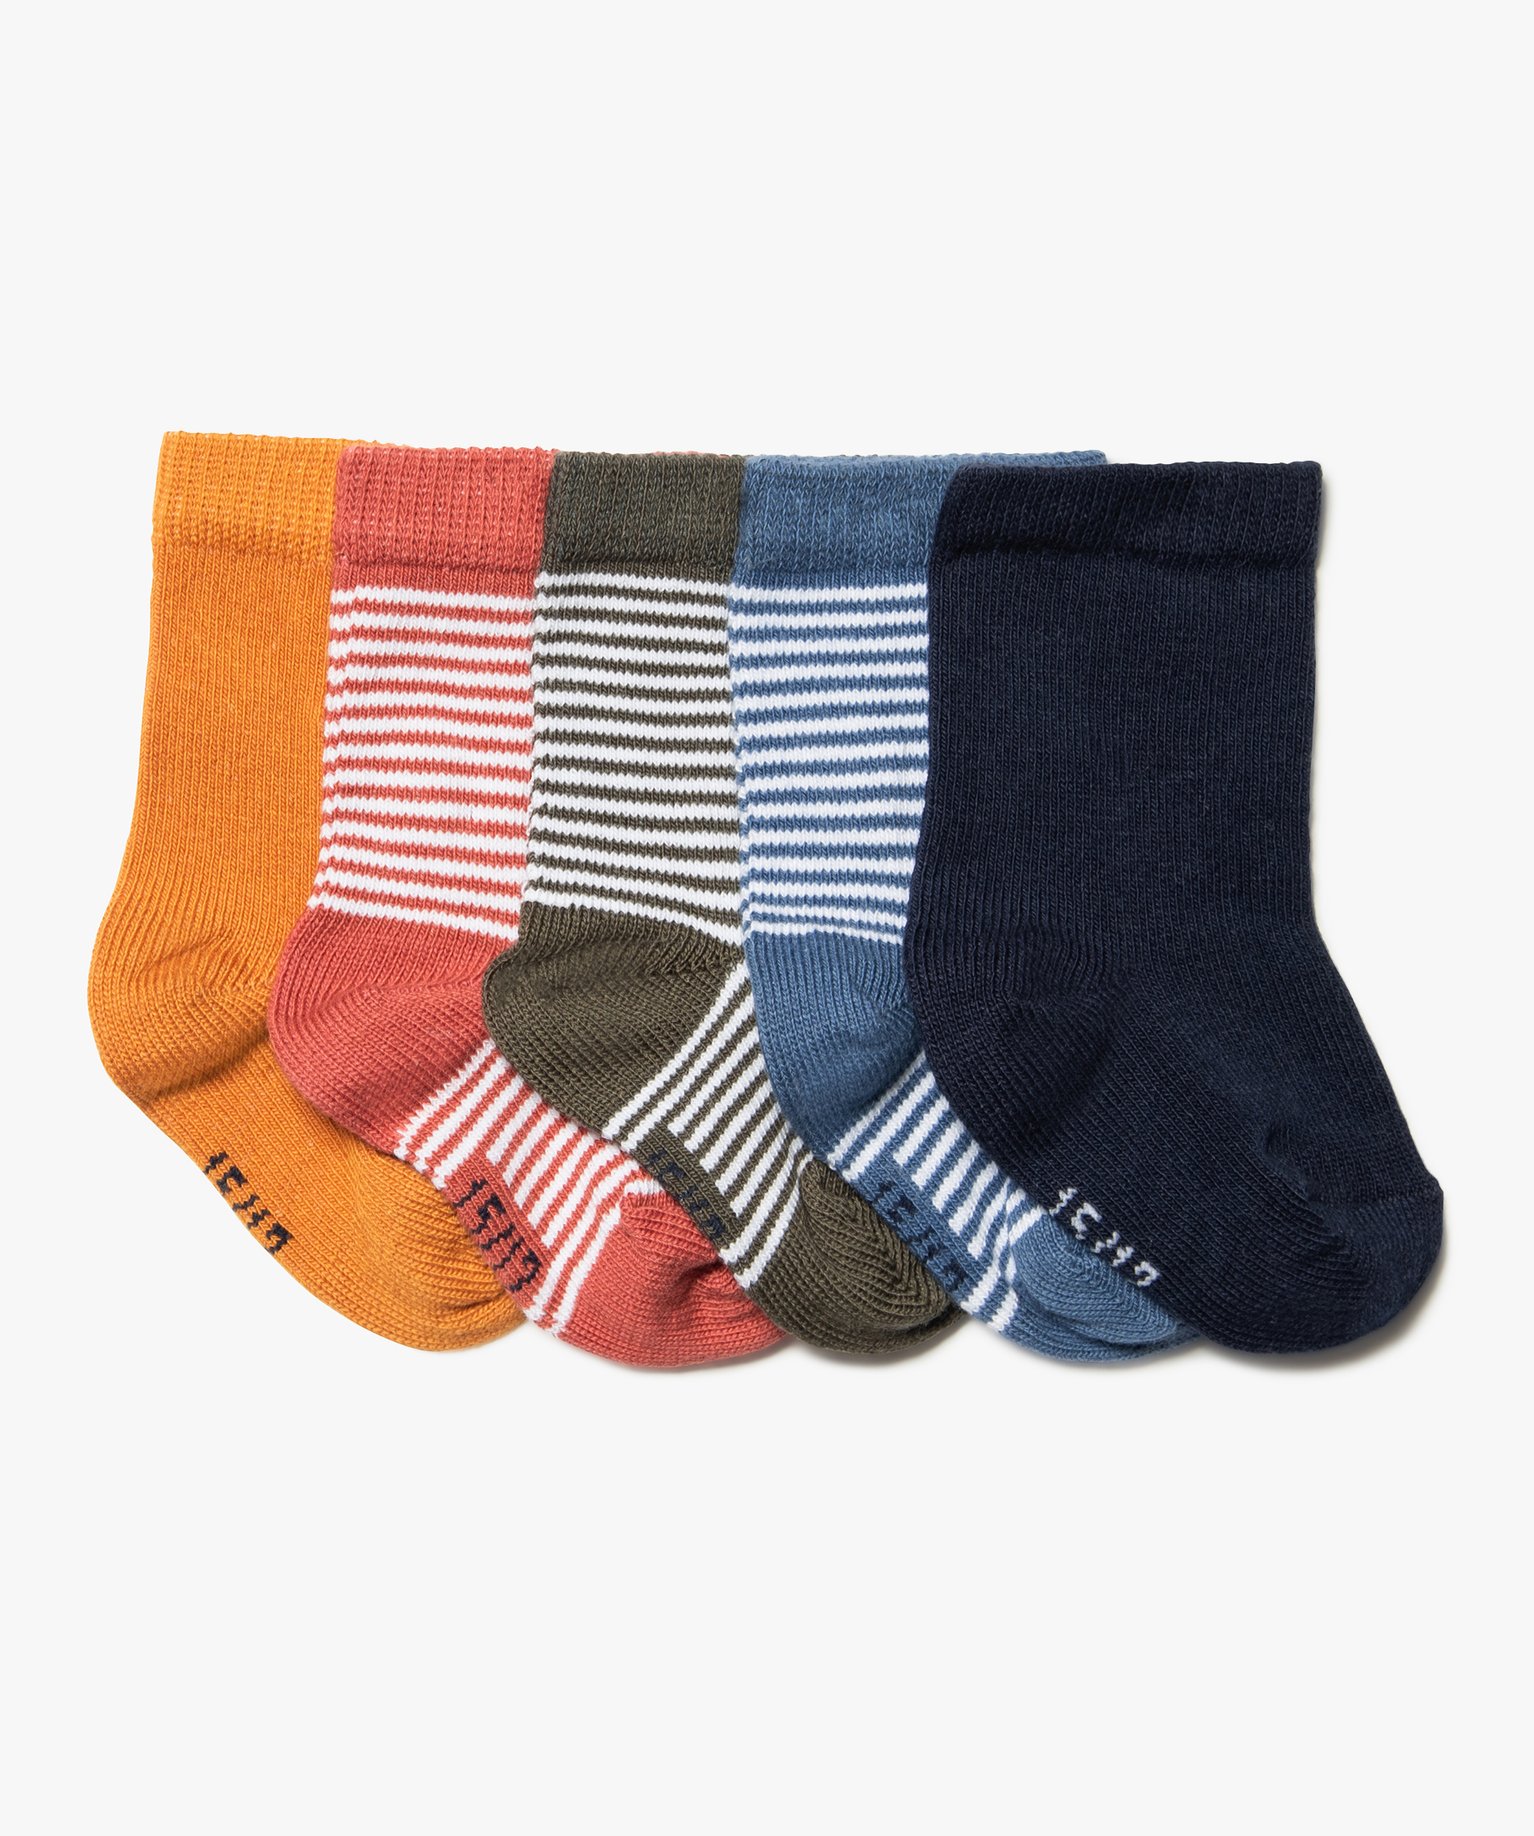 Chaussettes à rayures bébé (lot de 5) - 15/17 - bleu standard - GEMO